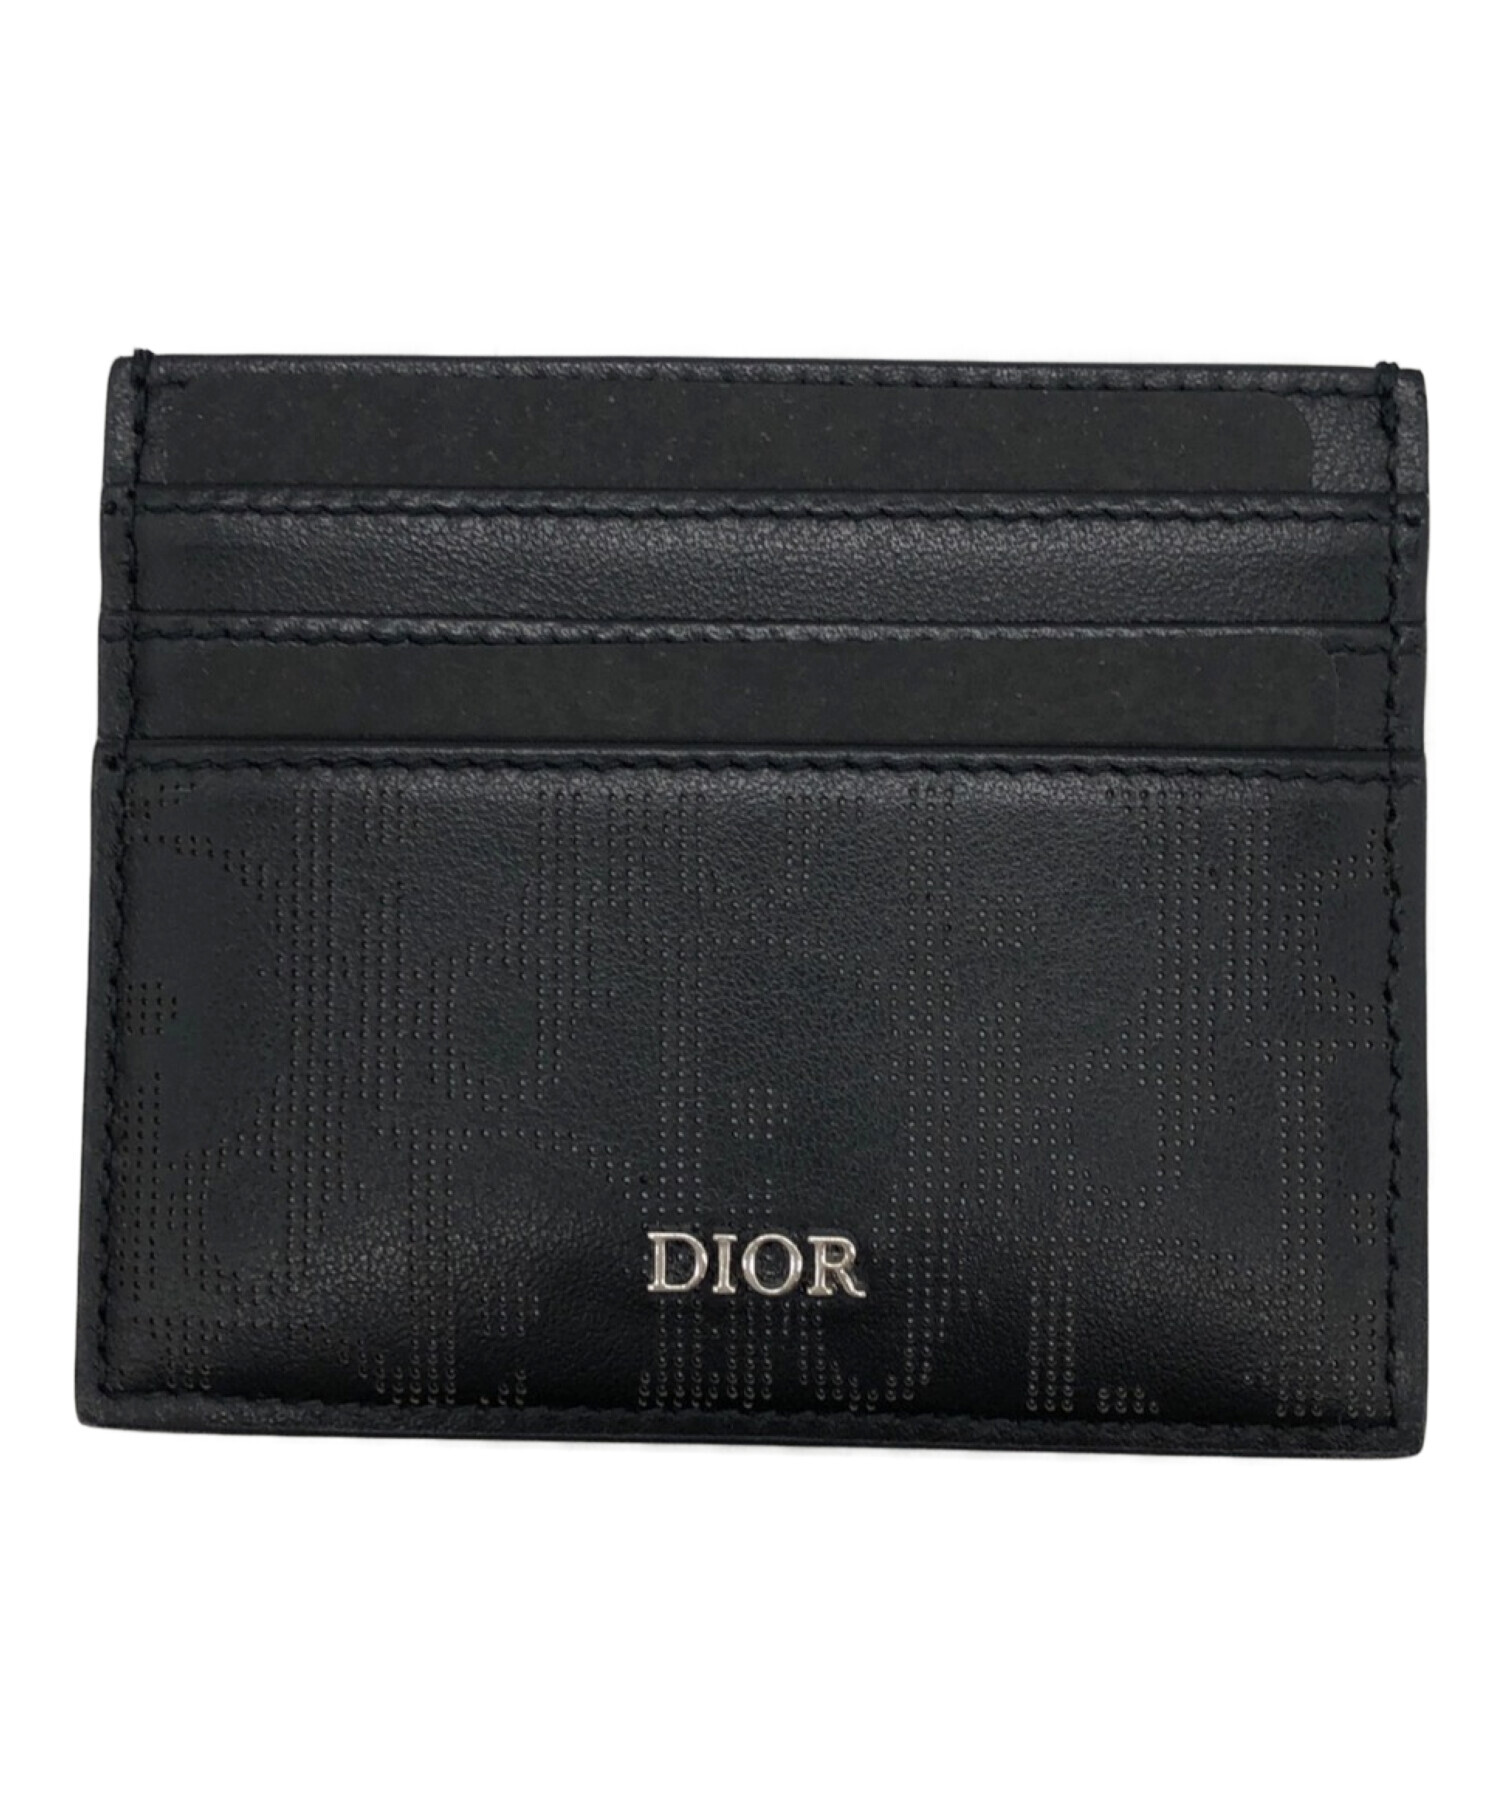 Christian Dior (クリスチャン ディオール) オブリーク カードケース ブラック